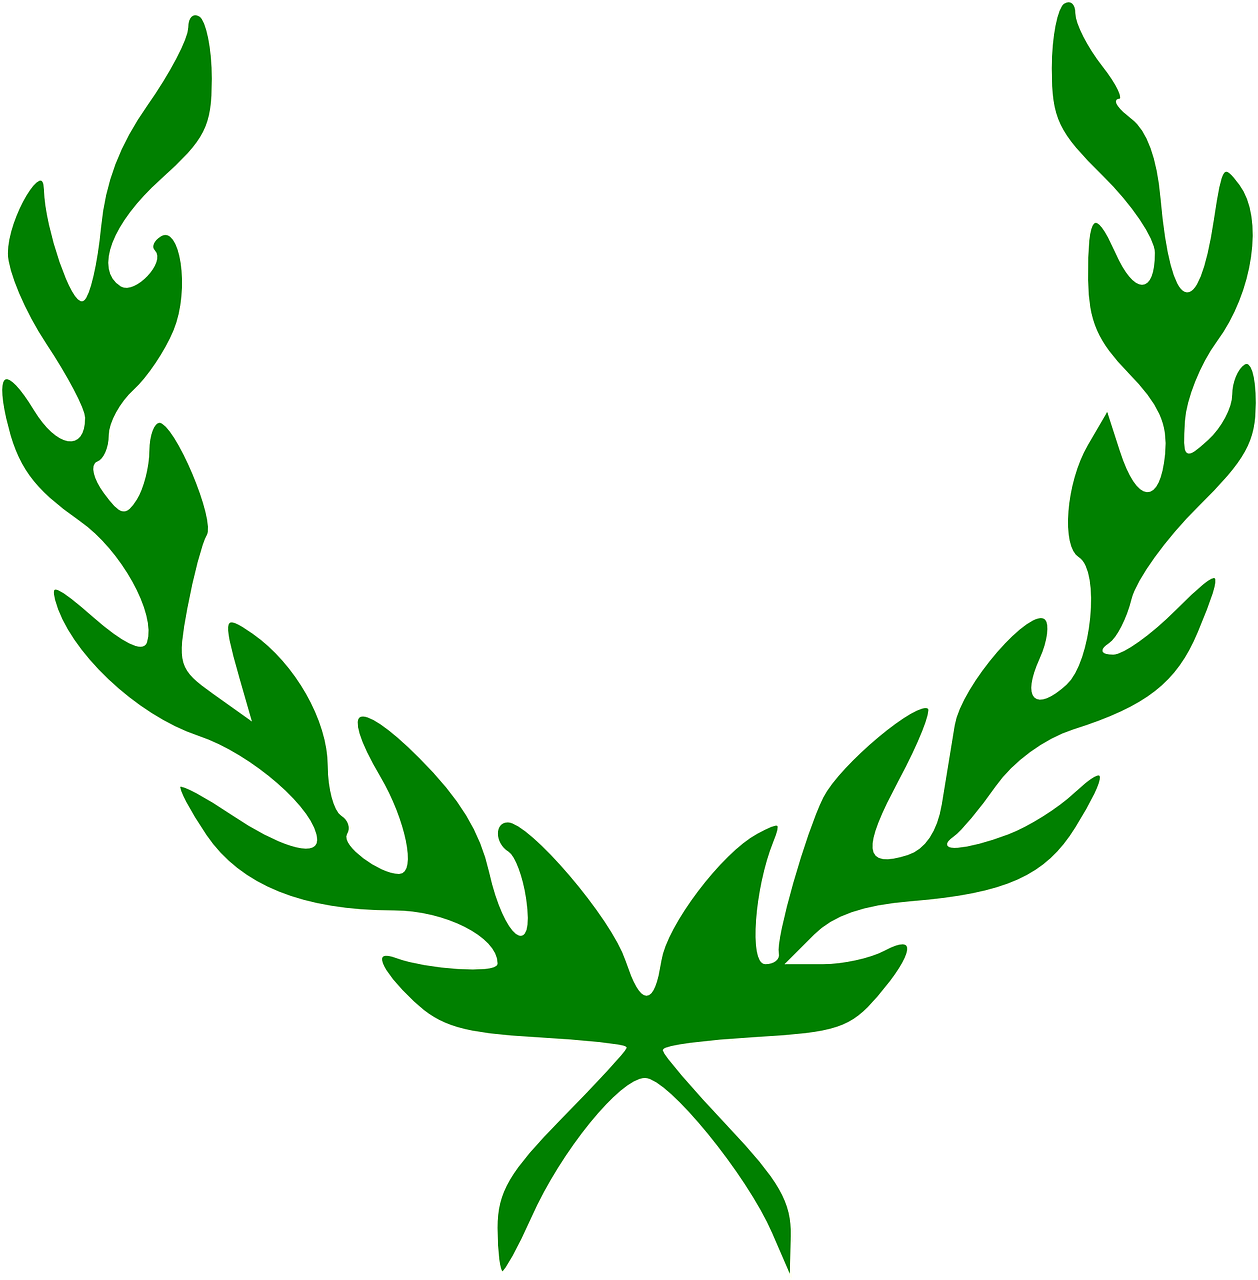 a green laurel wreath on a black background, inspired by Herb Aach, hurufiyya, iroc, triumph, green fire, palm